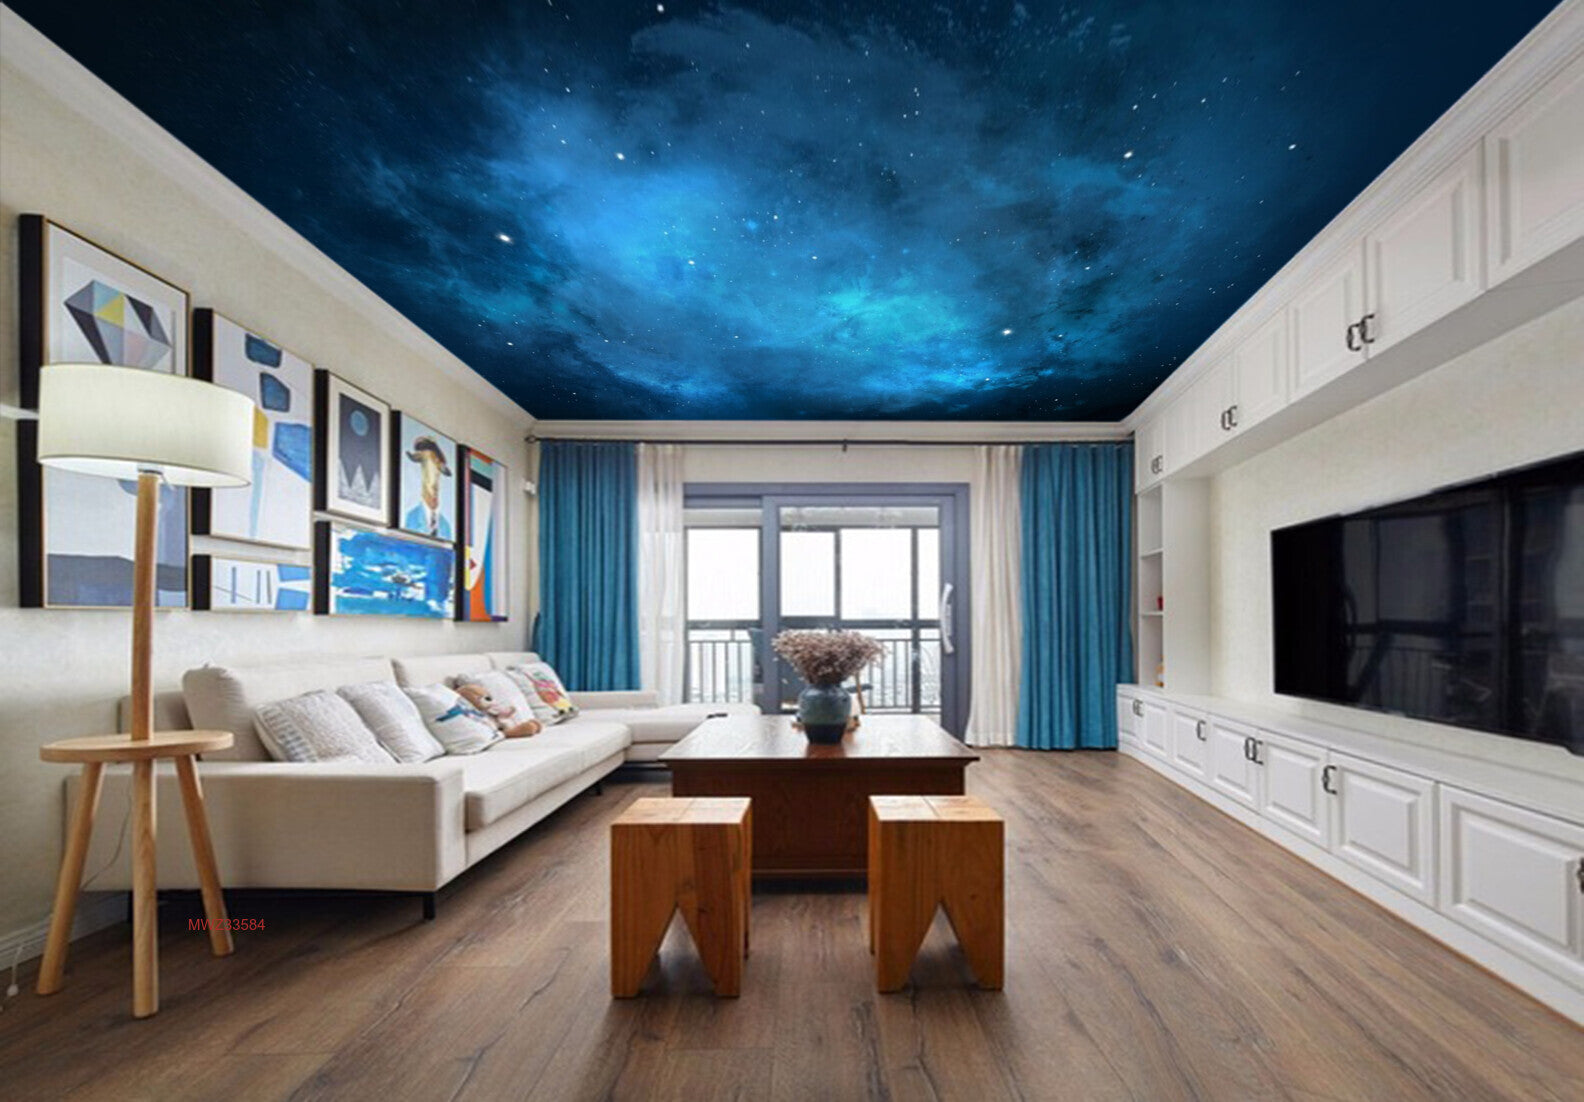 Avikalp MWZ3358 Space Blue Sky Stars HD Wallpaper for Ceiling